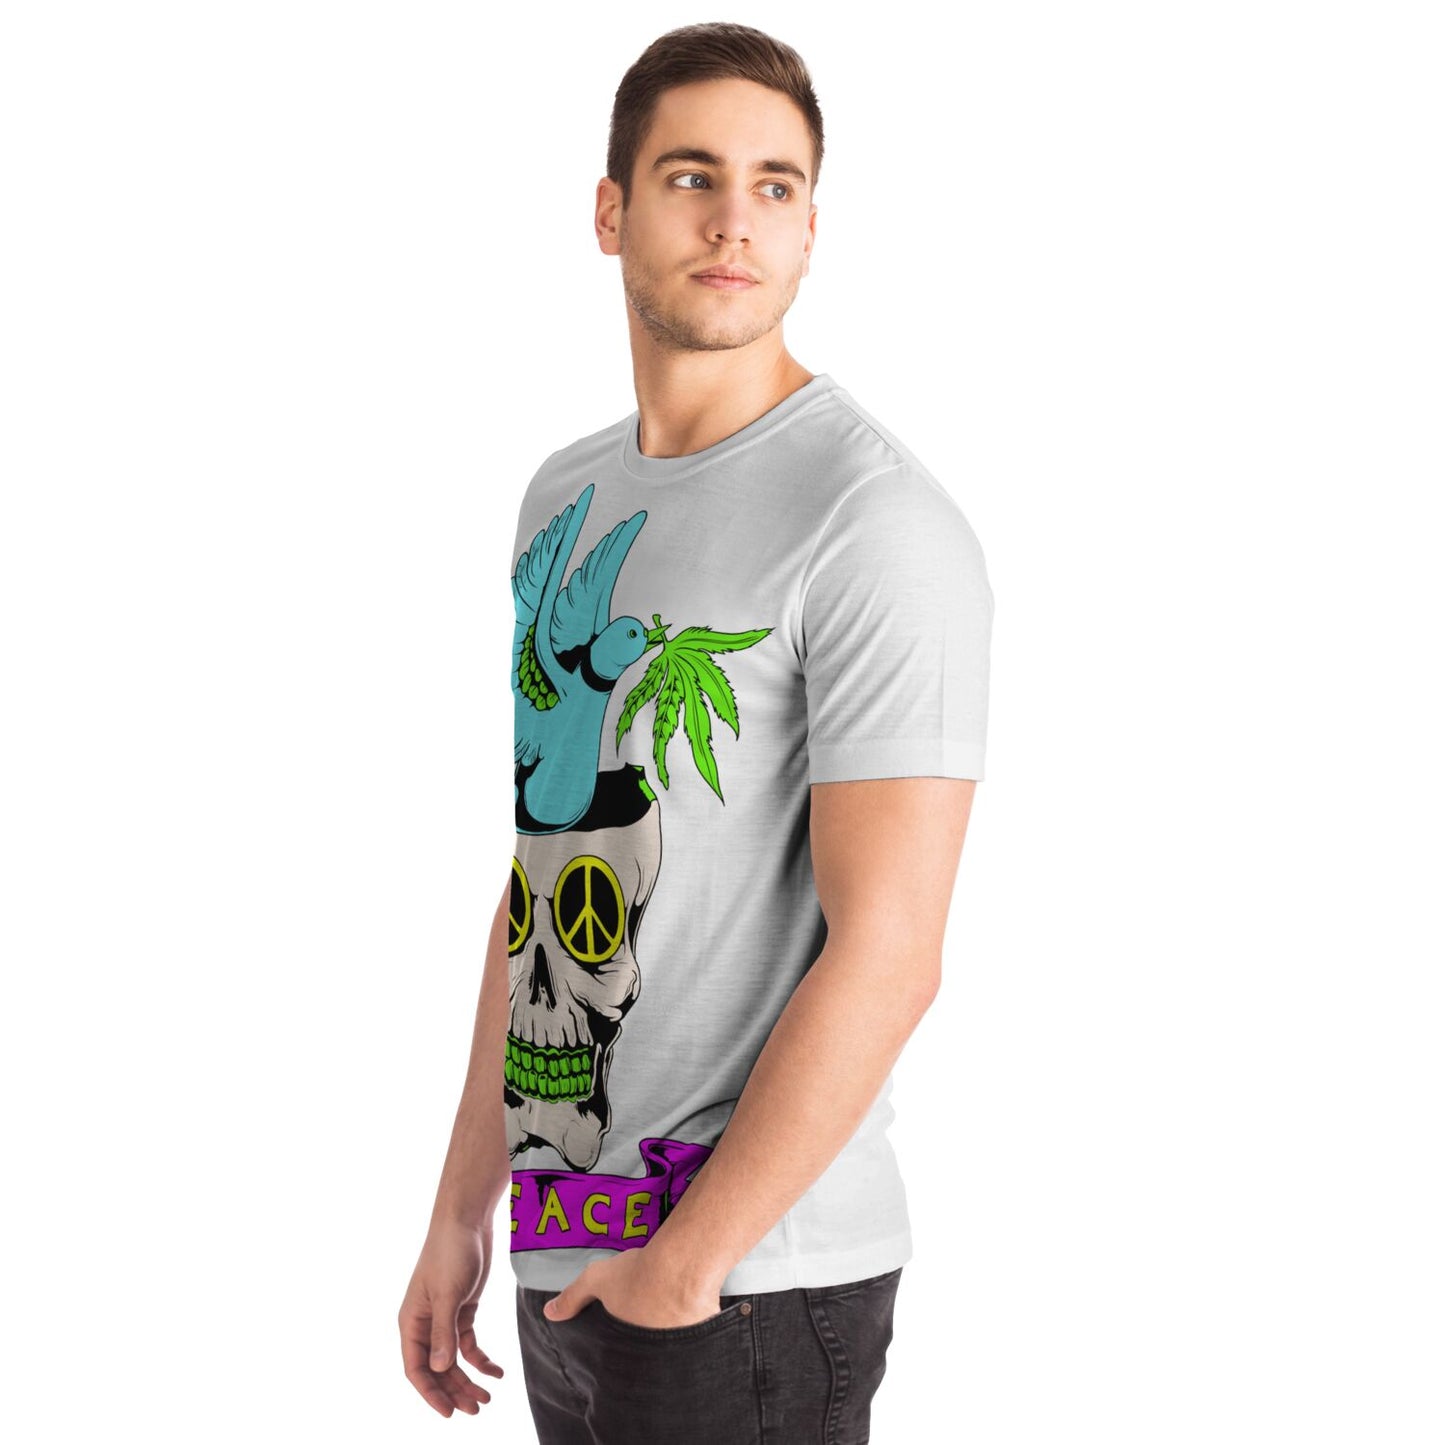 EYS Designer Peace & Mind-Blowing Weed Shirt